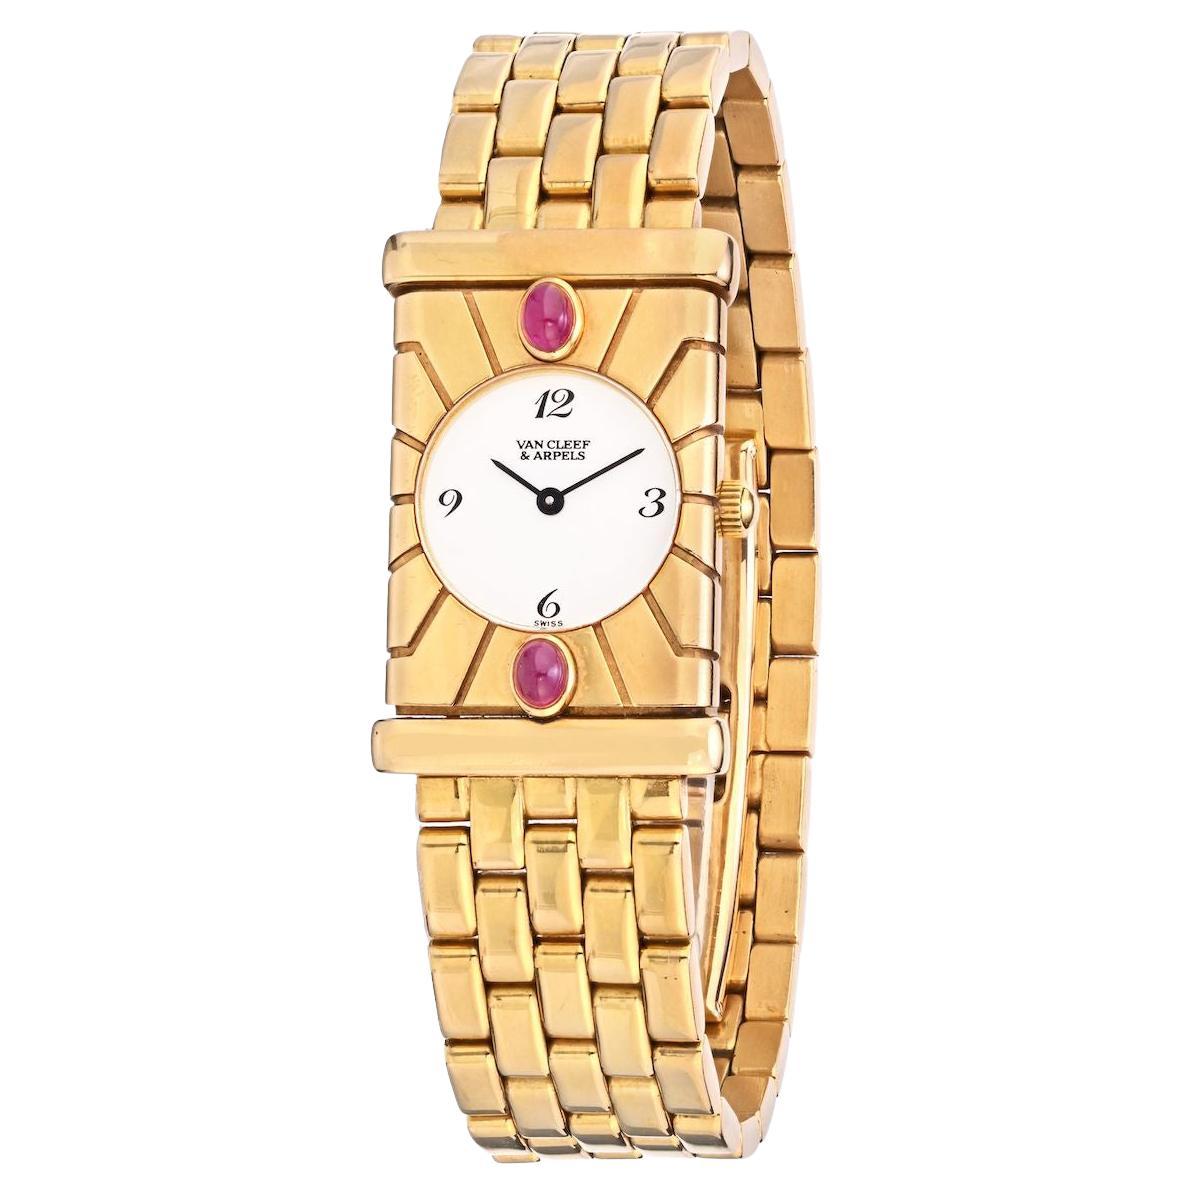 Van Cleef & Arpels Façade 18K Gelbgold Vintage Uhr im Angebot